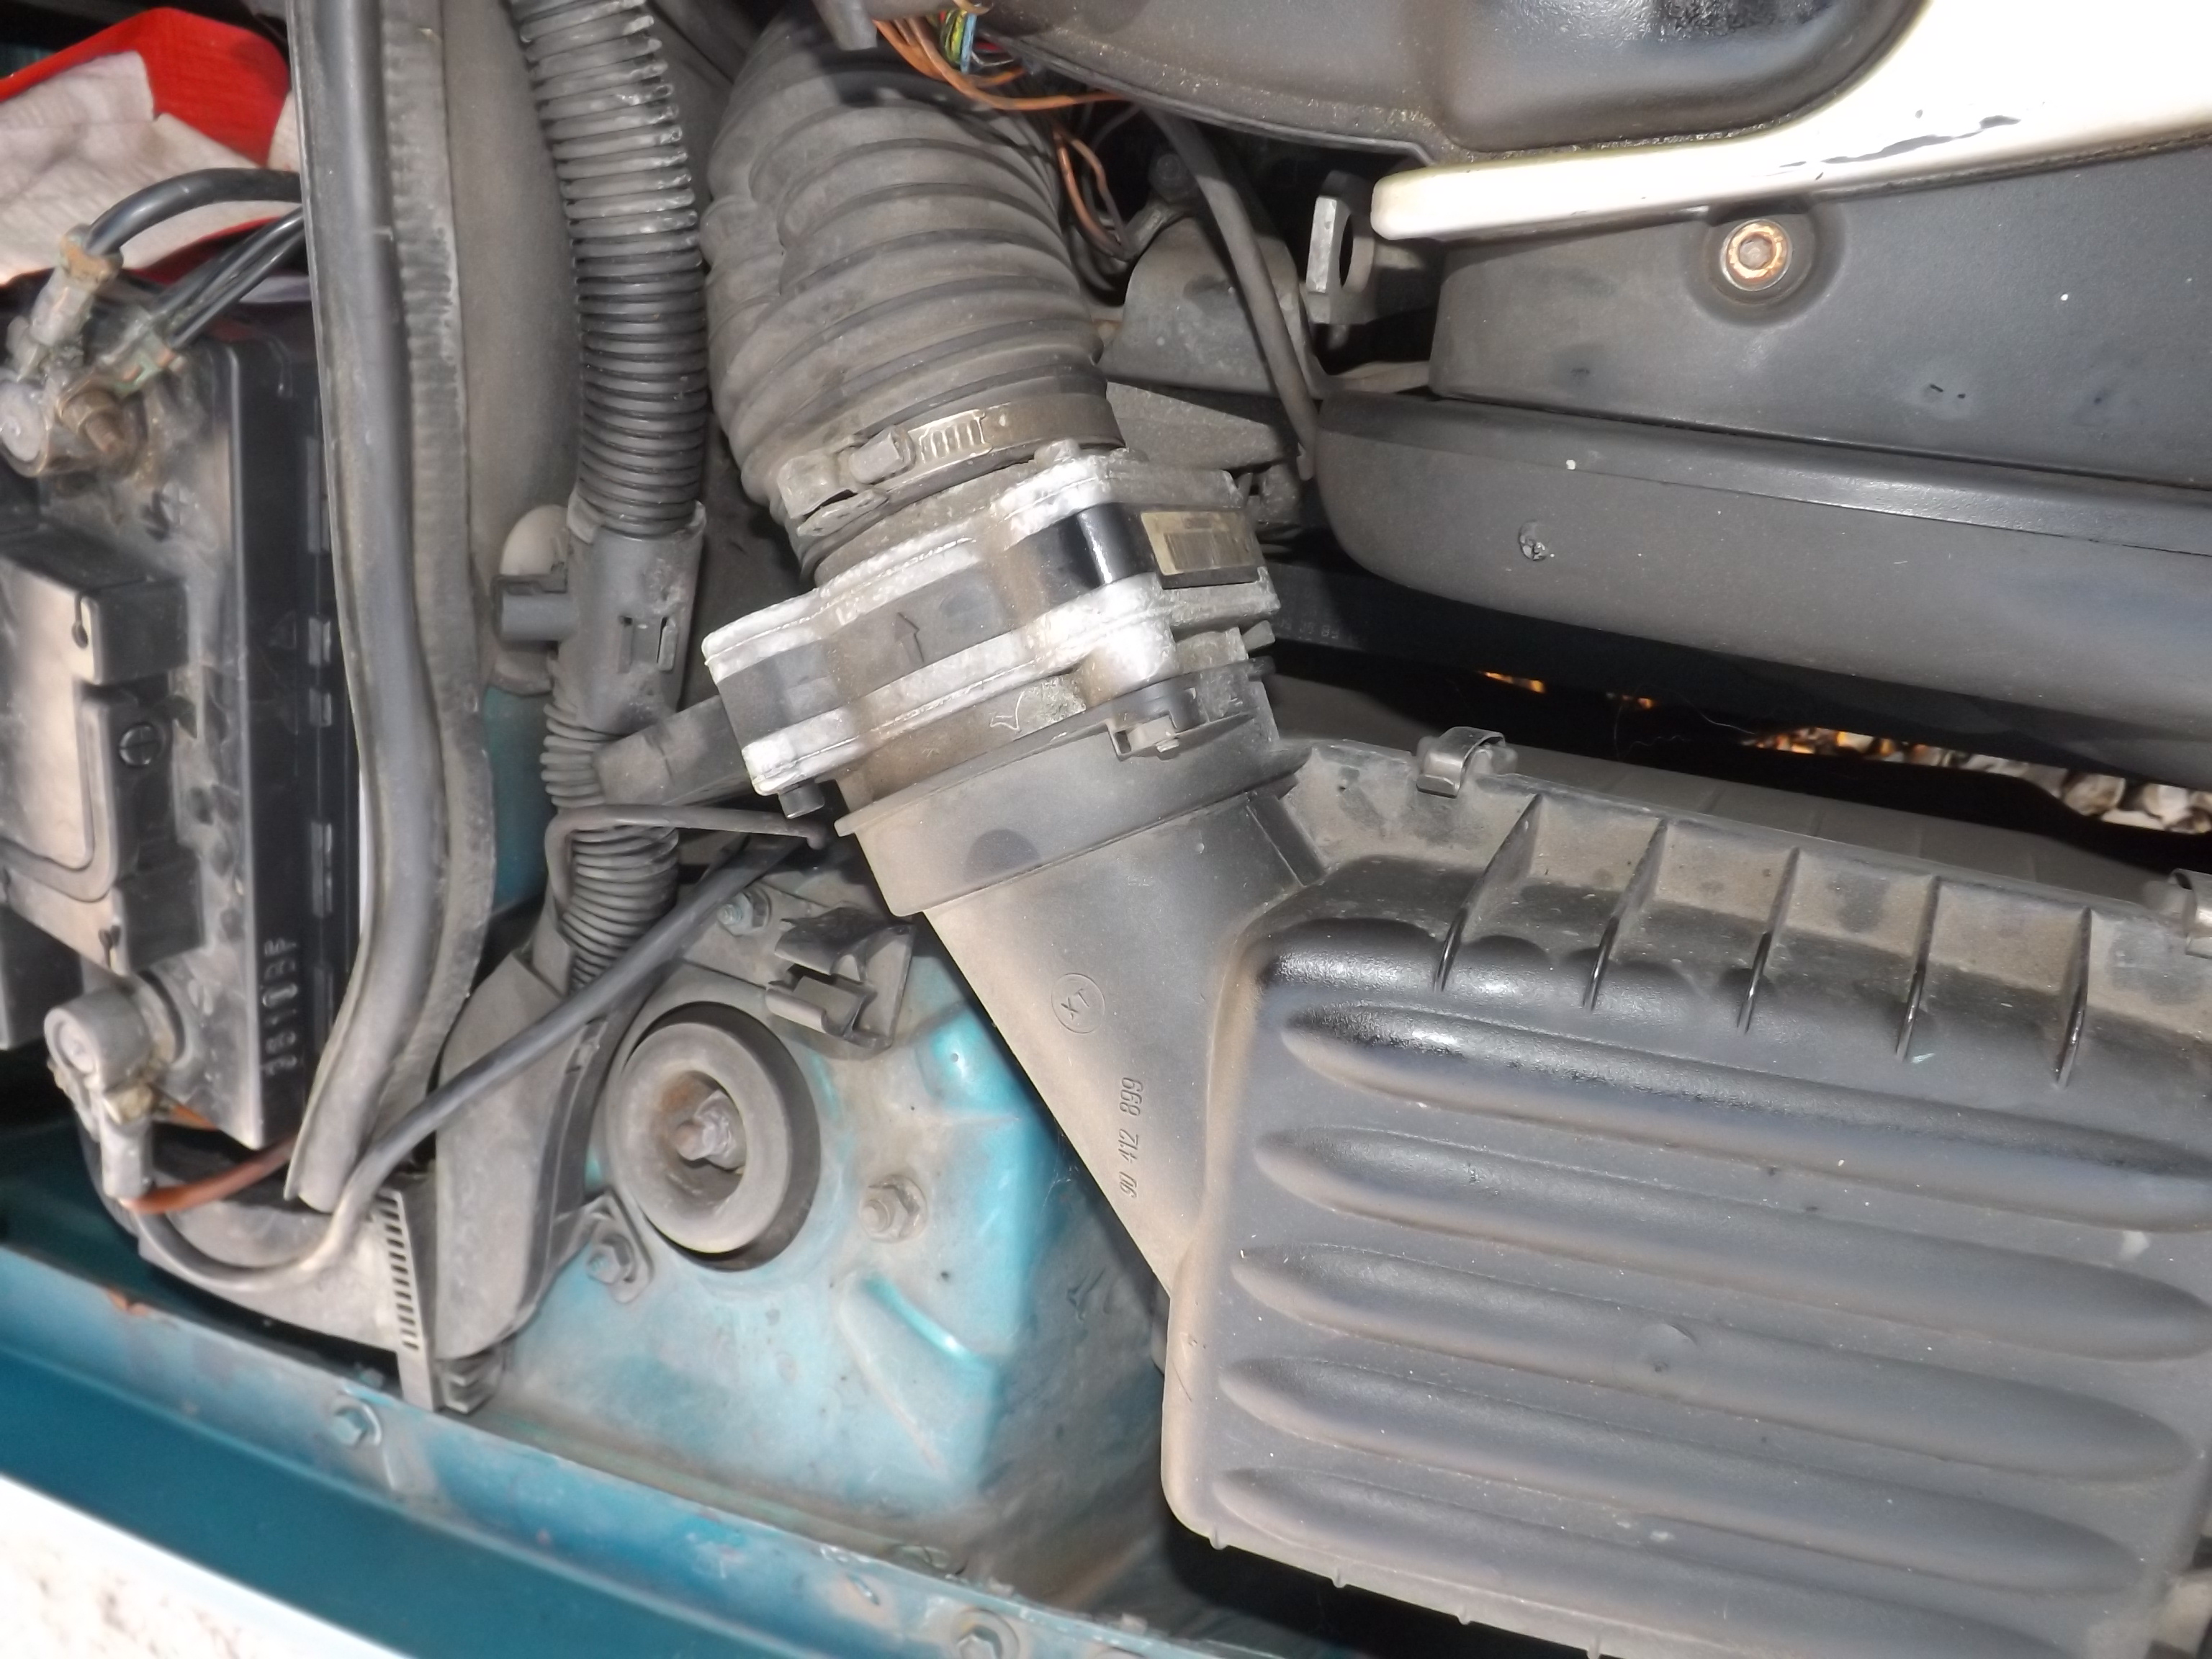 Opel Corsa B zaburzona praca silnika na zimnym silniku.